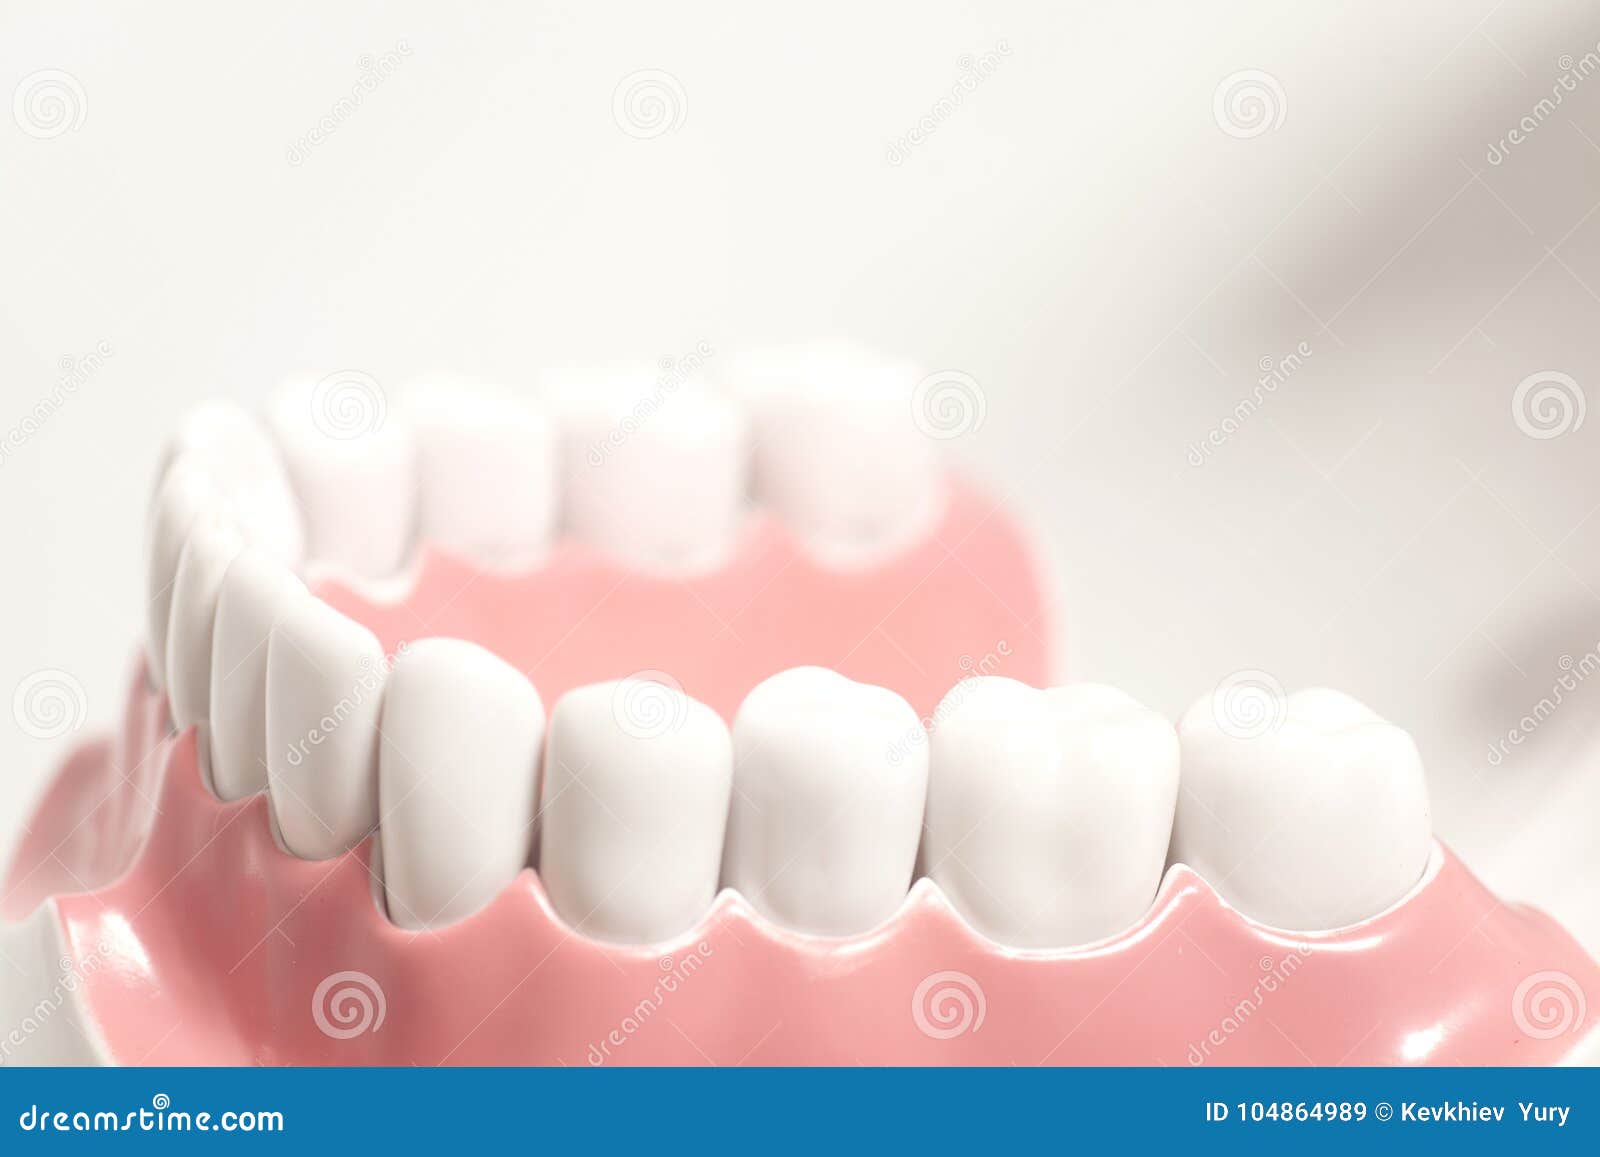 generic dental human teeth model